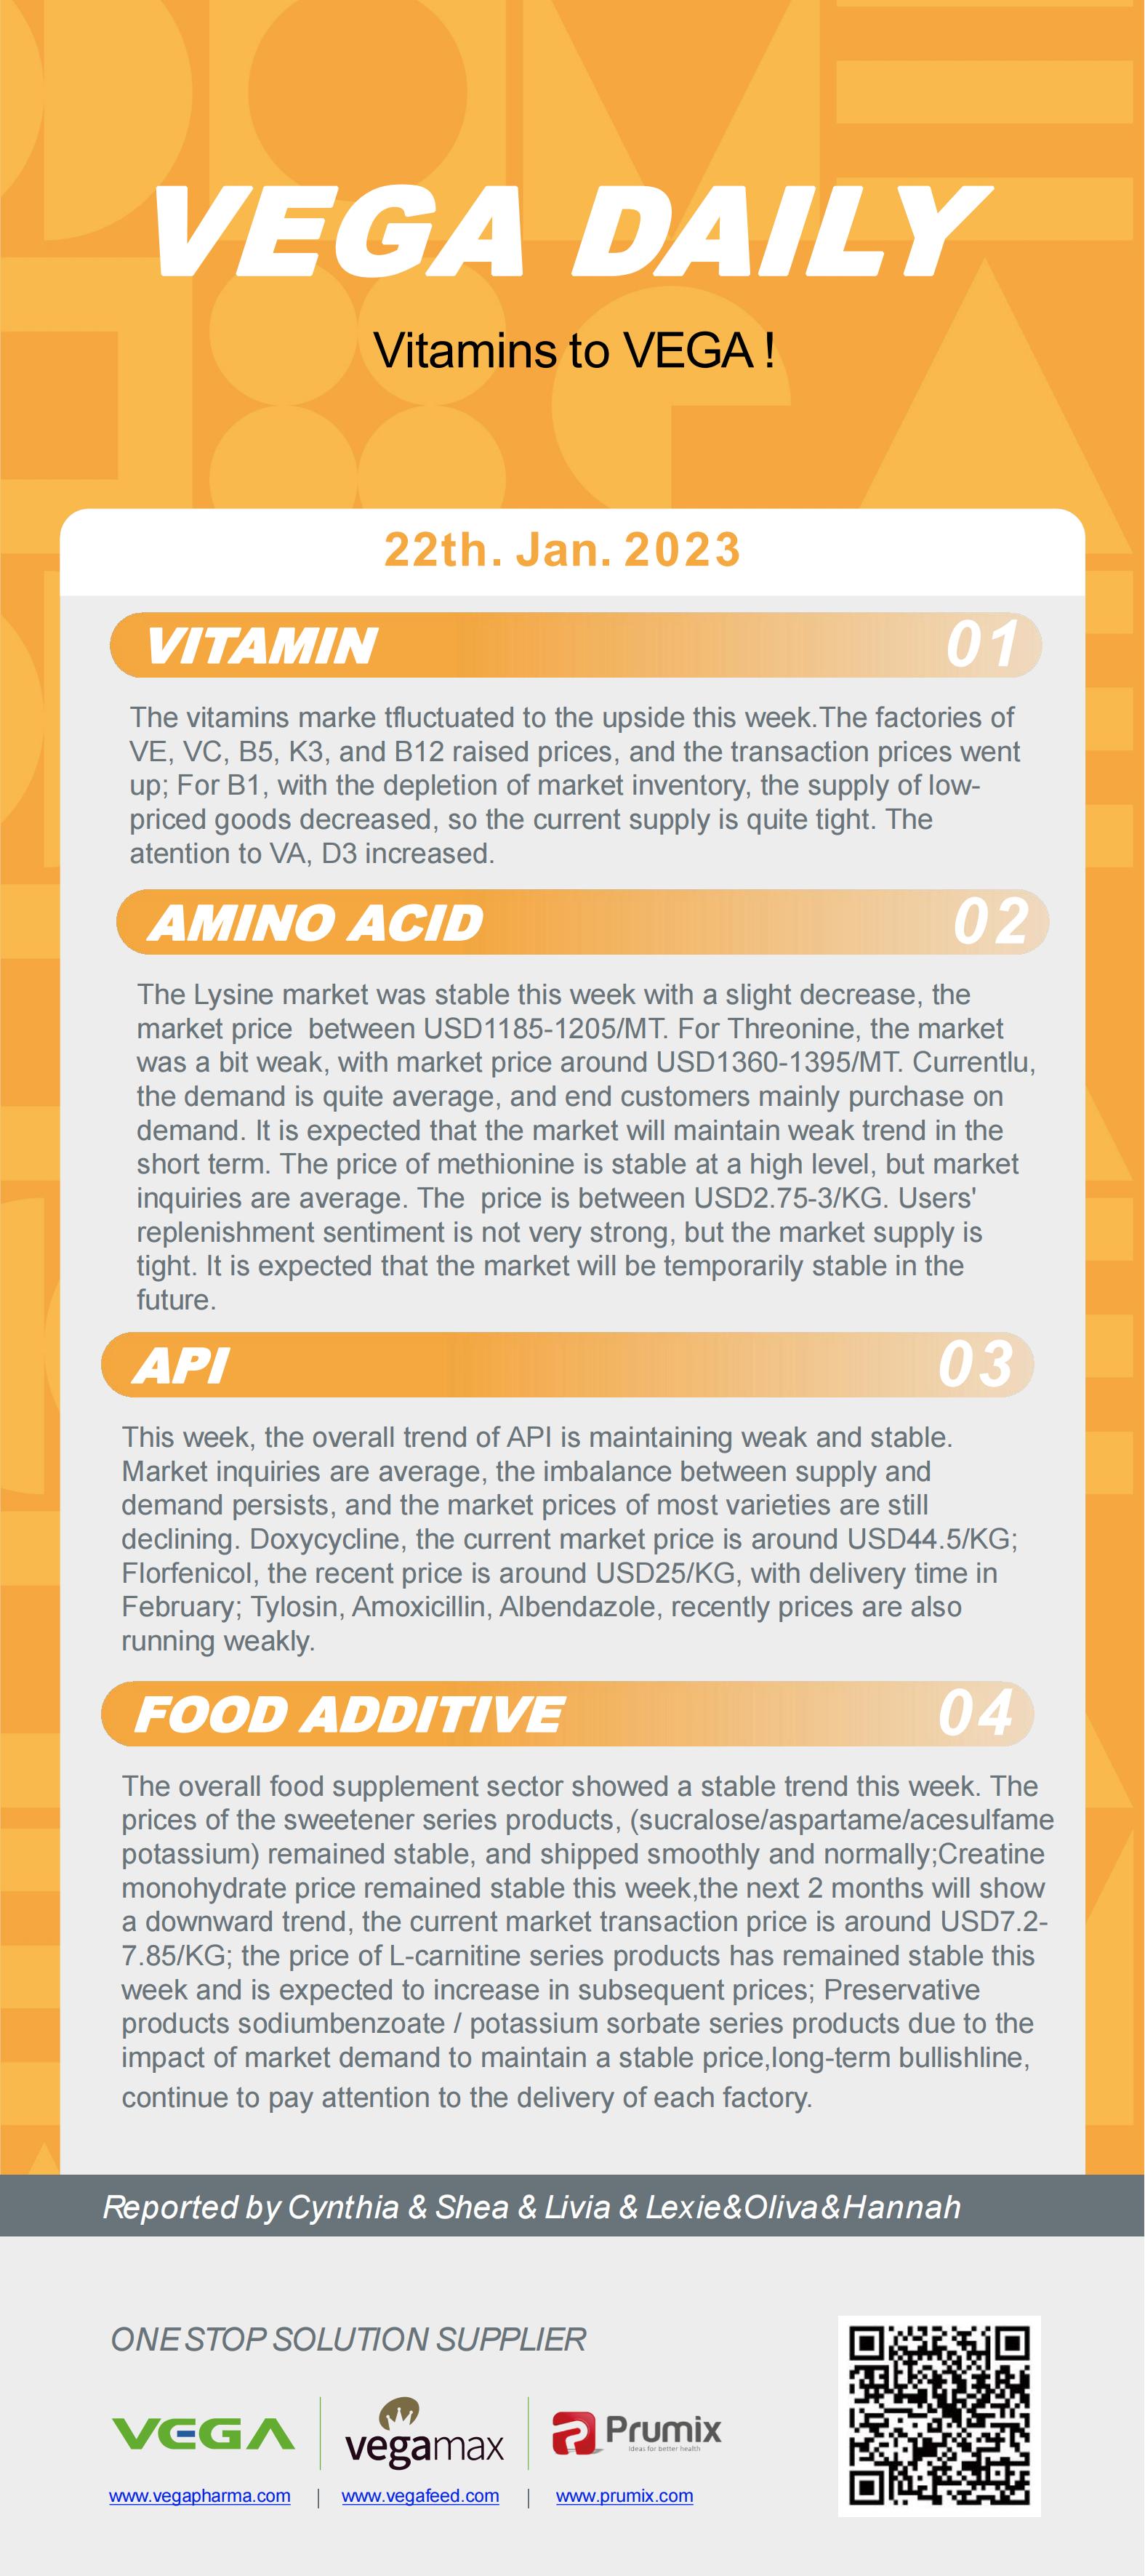 Vega Daily Dated on Jan 22nd 2024 Vitamin Amino Acid APl Food Additives.jpg